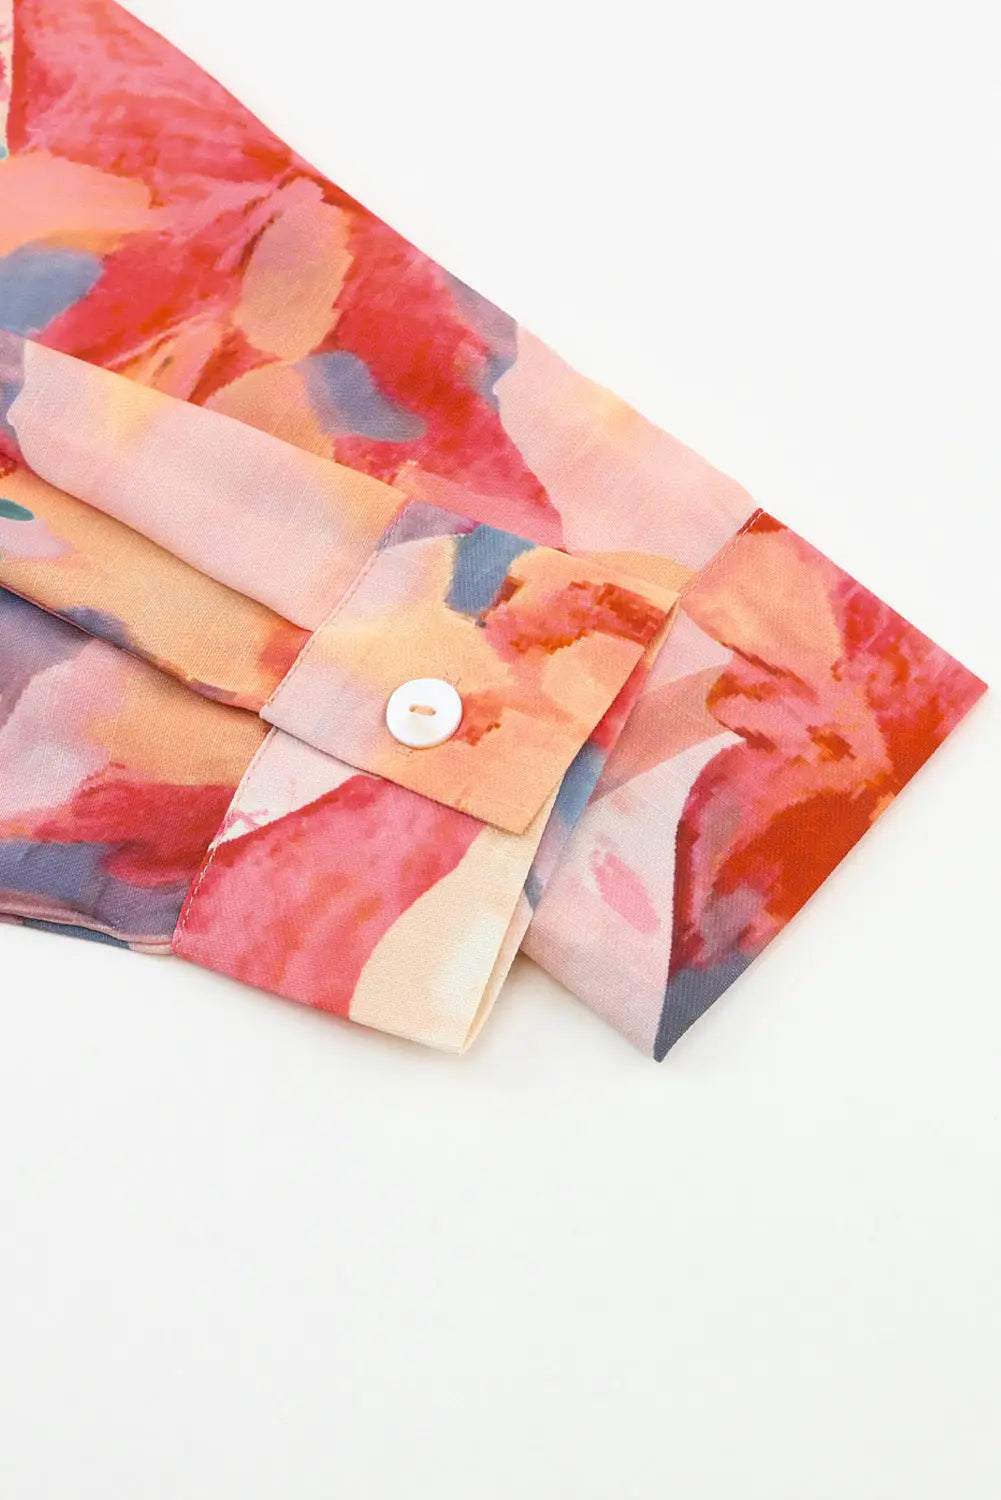 Floral print loose shirt - tops